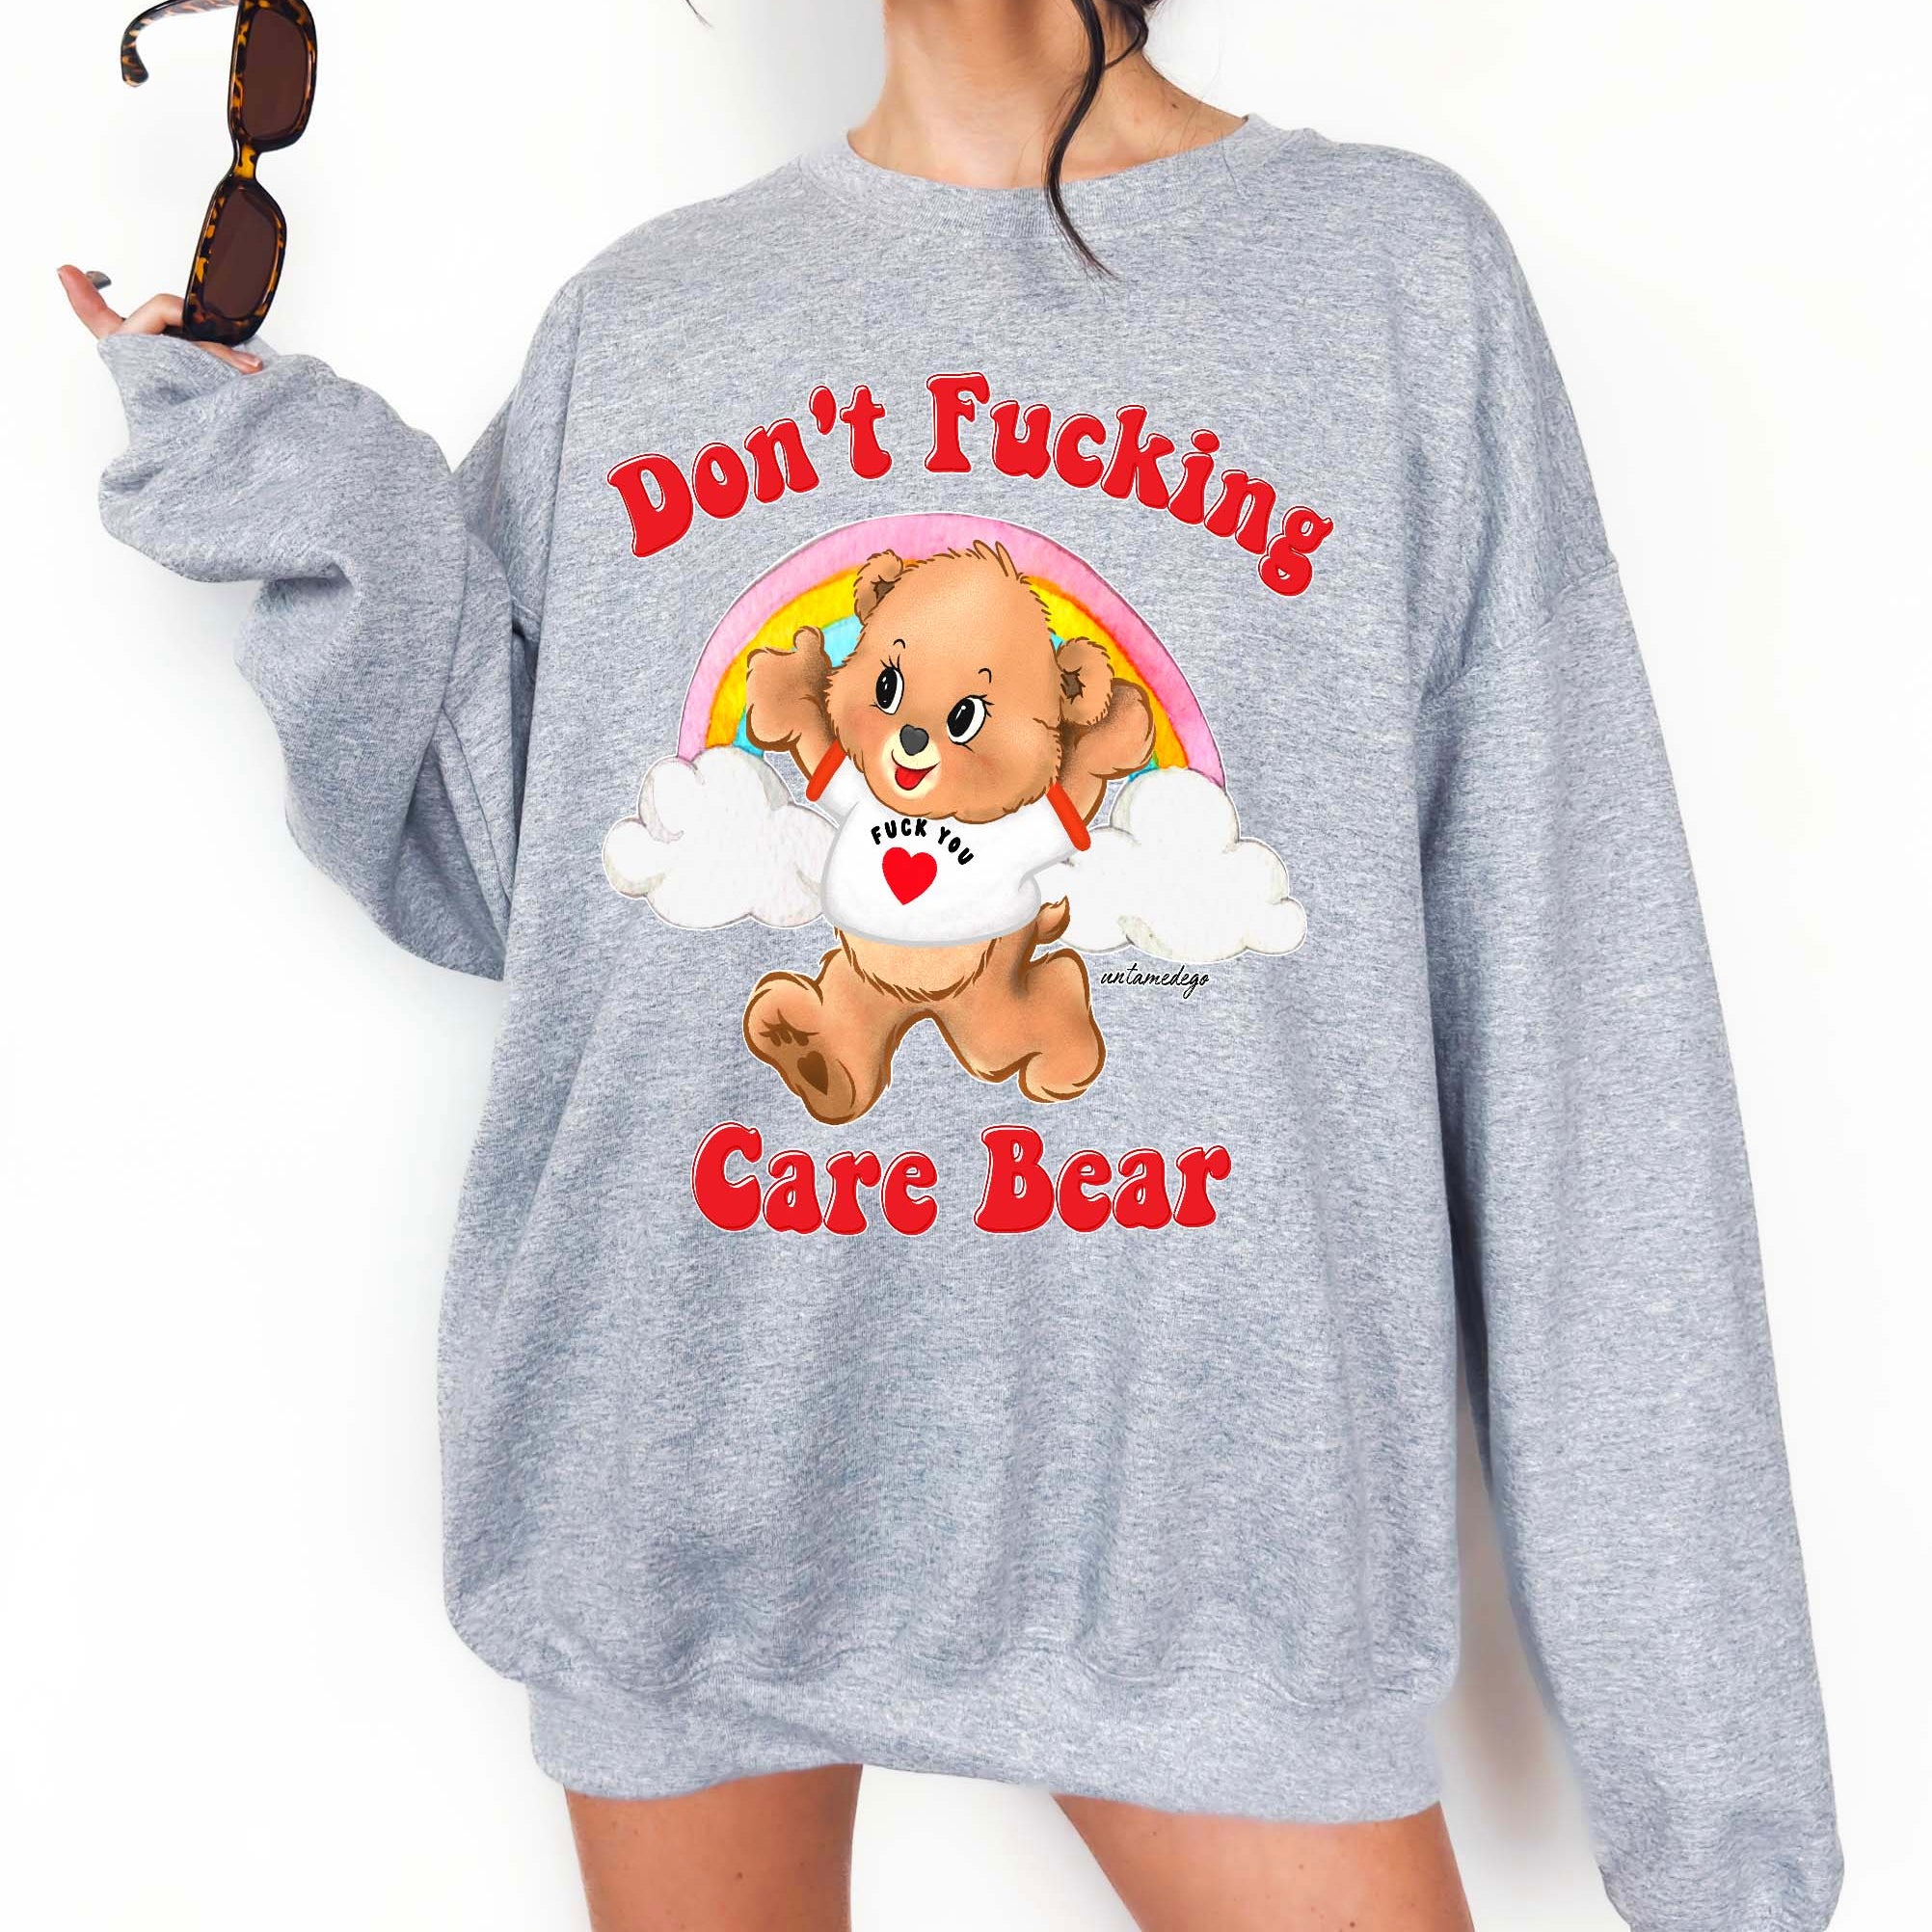 Don't Fucking Care Bear Crew Sweatshirt